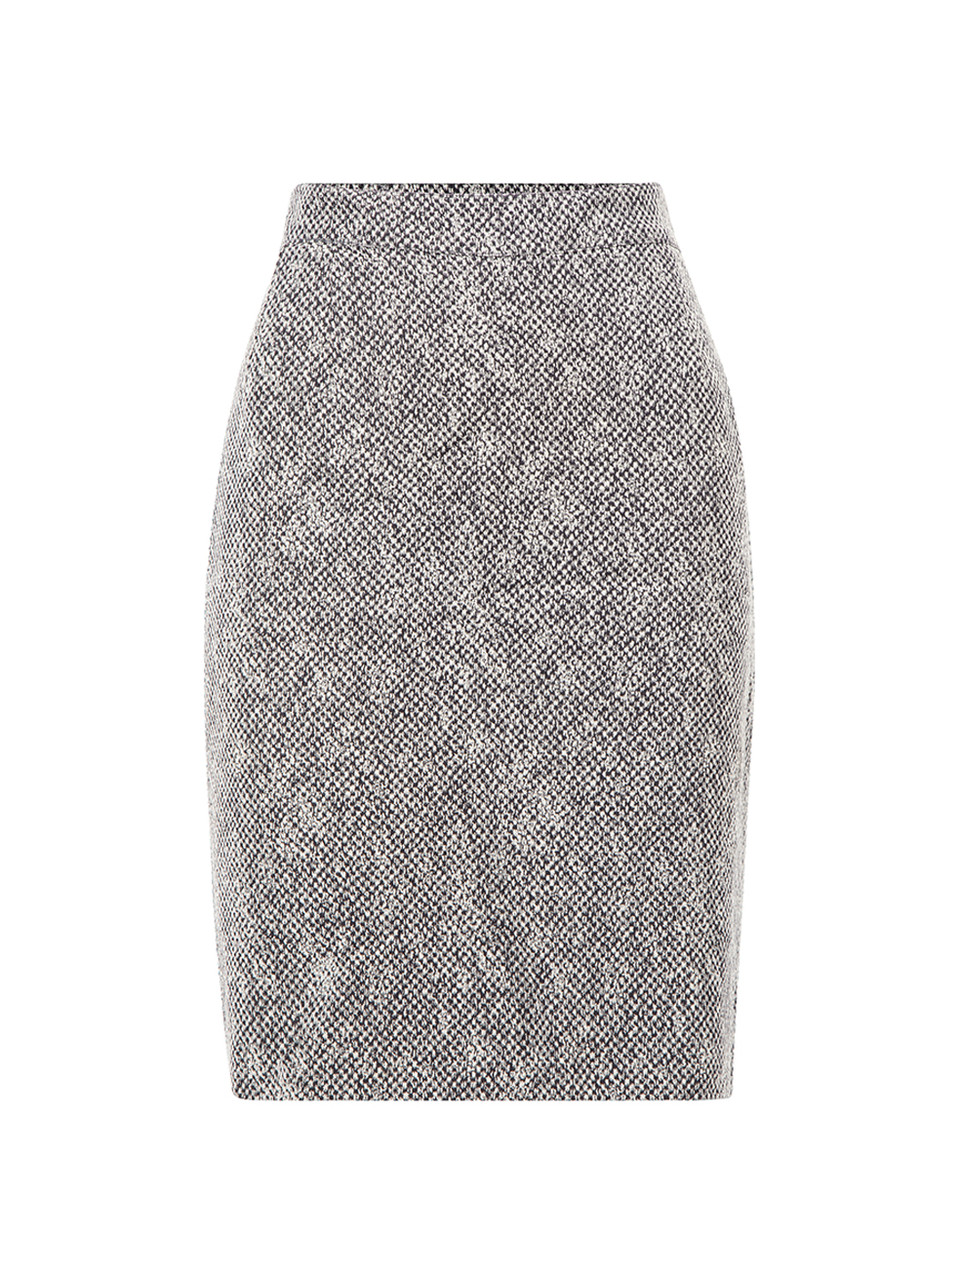 Yves Saint Laurent Grey Mini Pencil Skirt